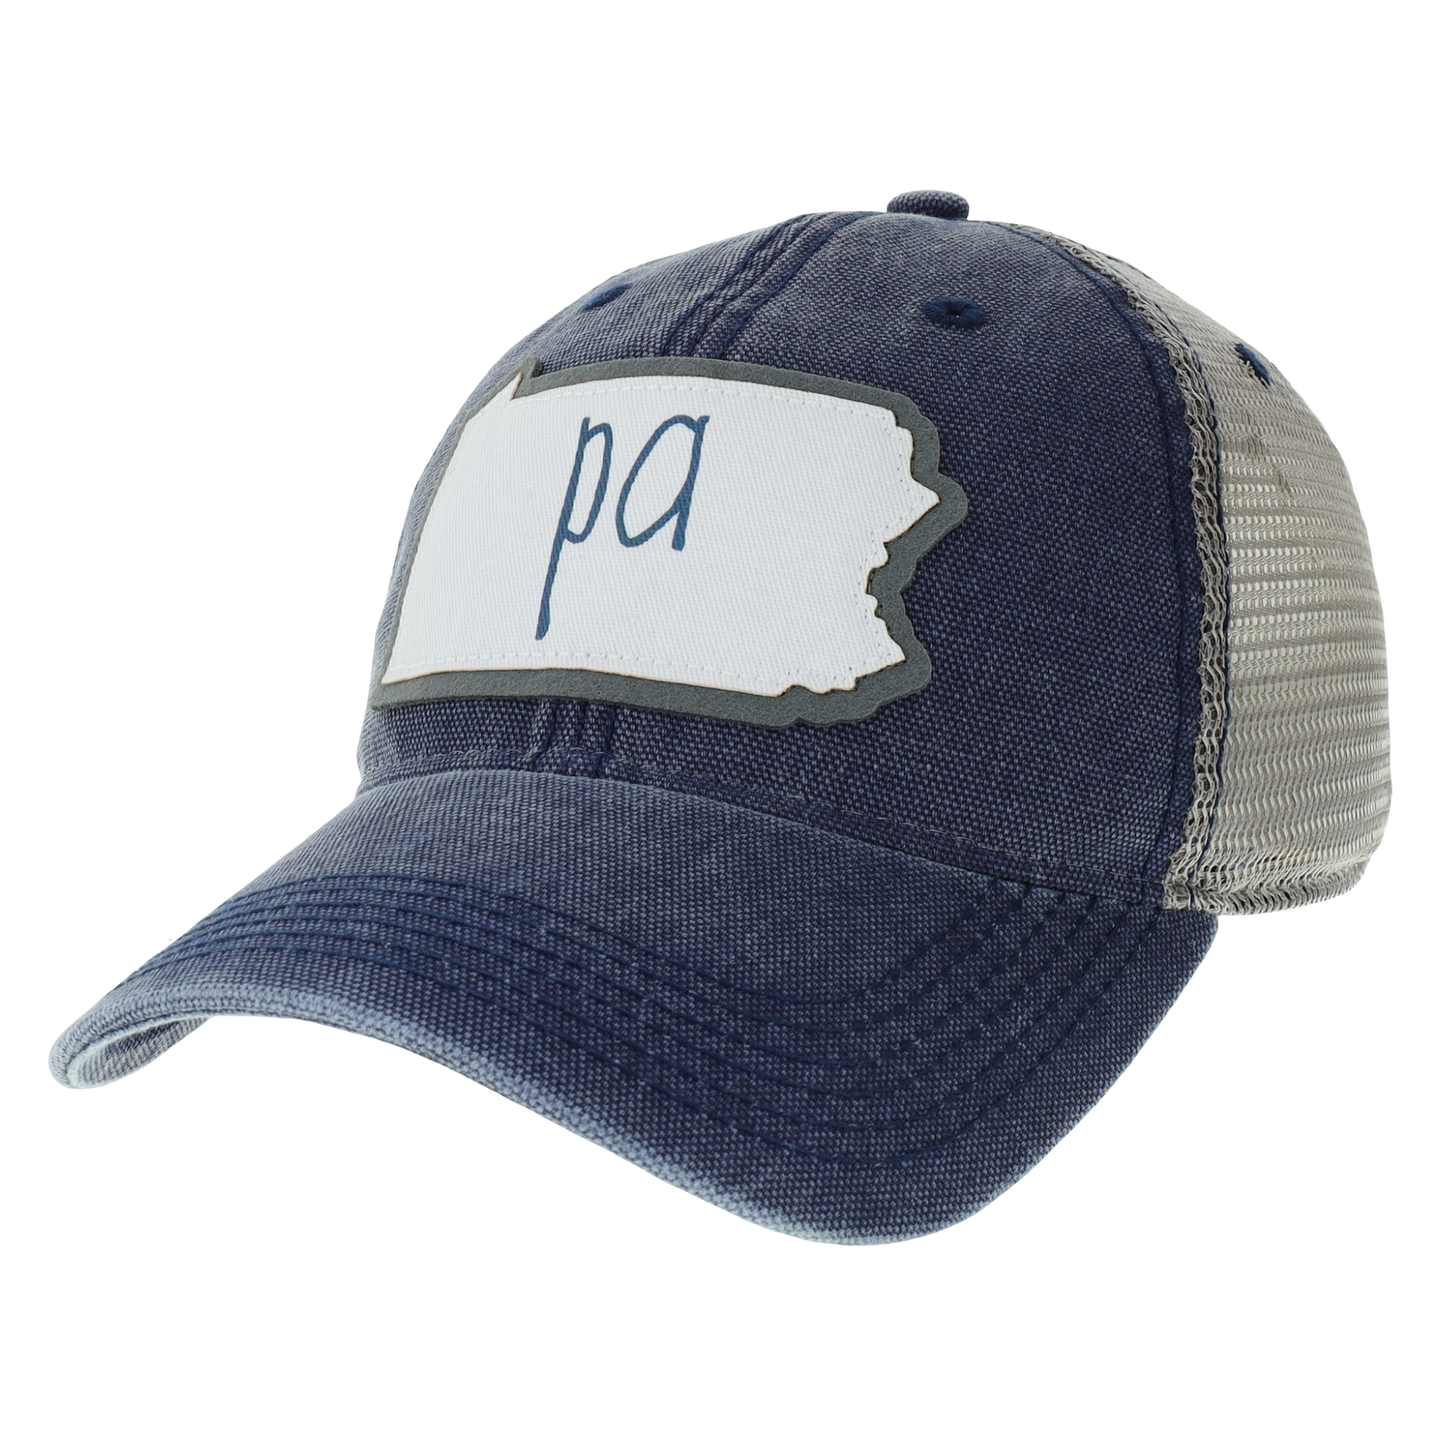 Pennsylvania Dashboard Trucker Hat in Navy/Gray